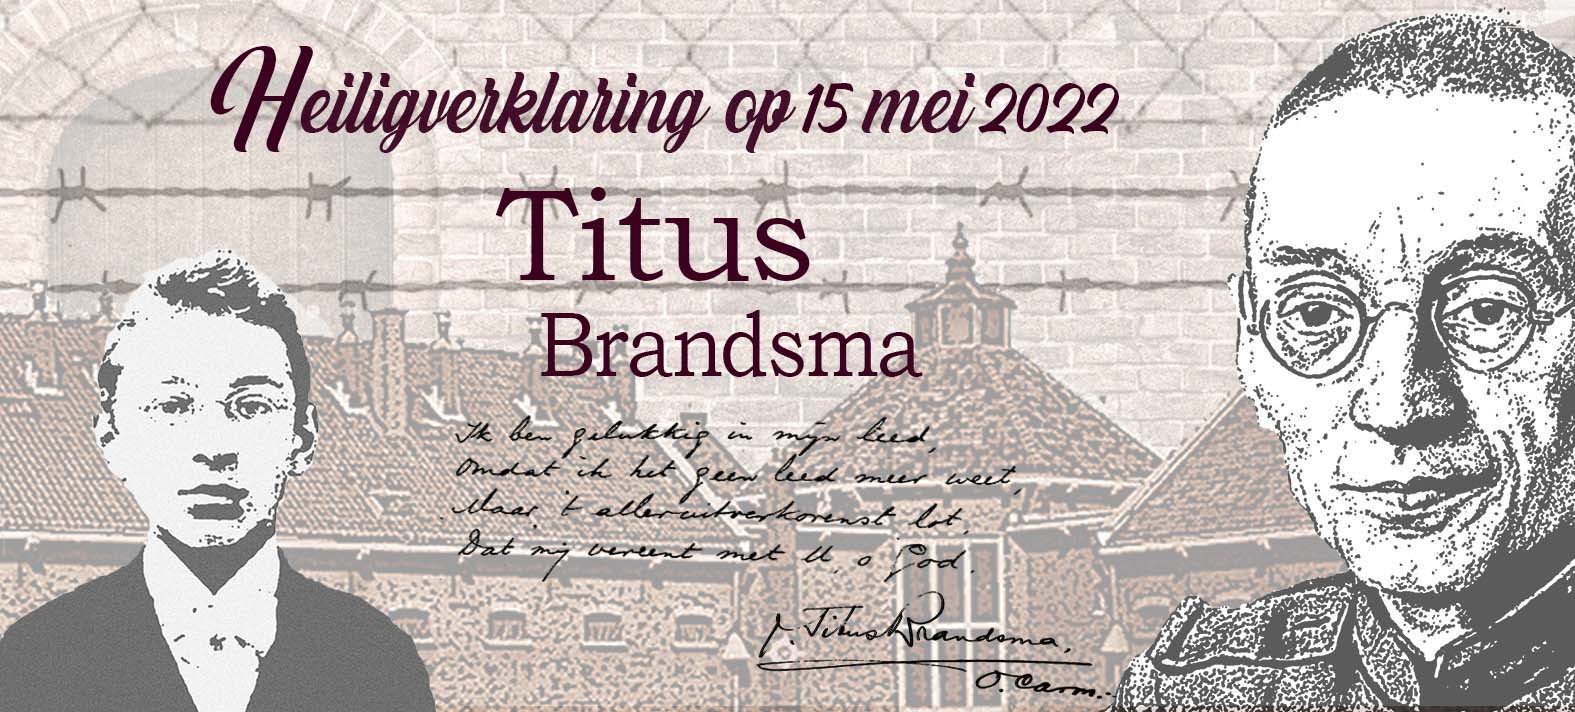 aankondiging Heiligverklaring Titus Brandsma op 15 mei 2022